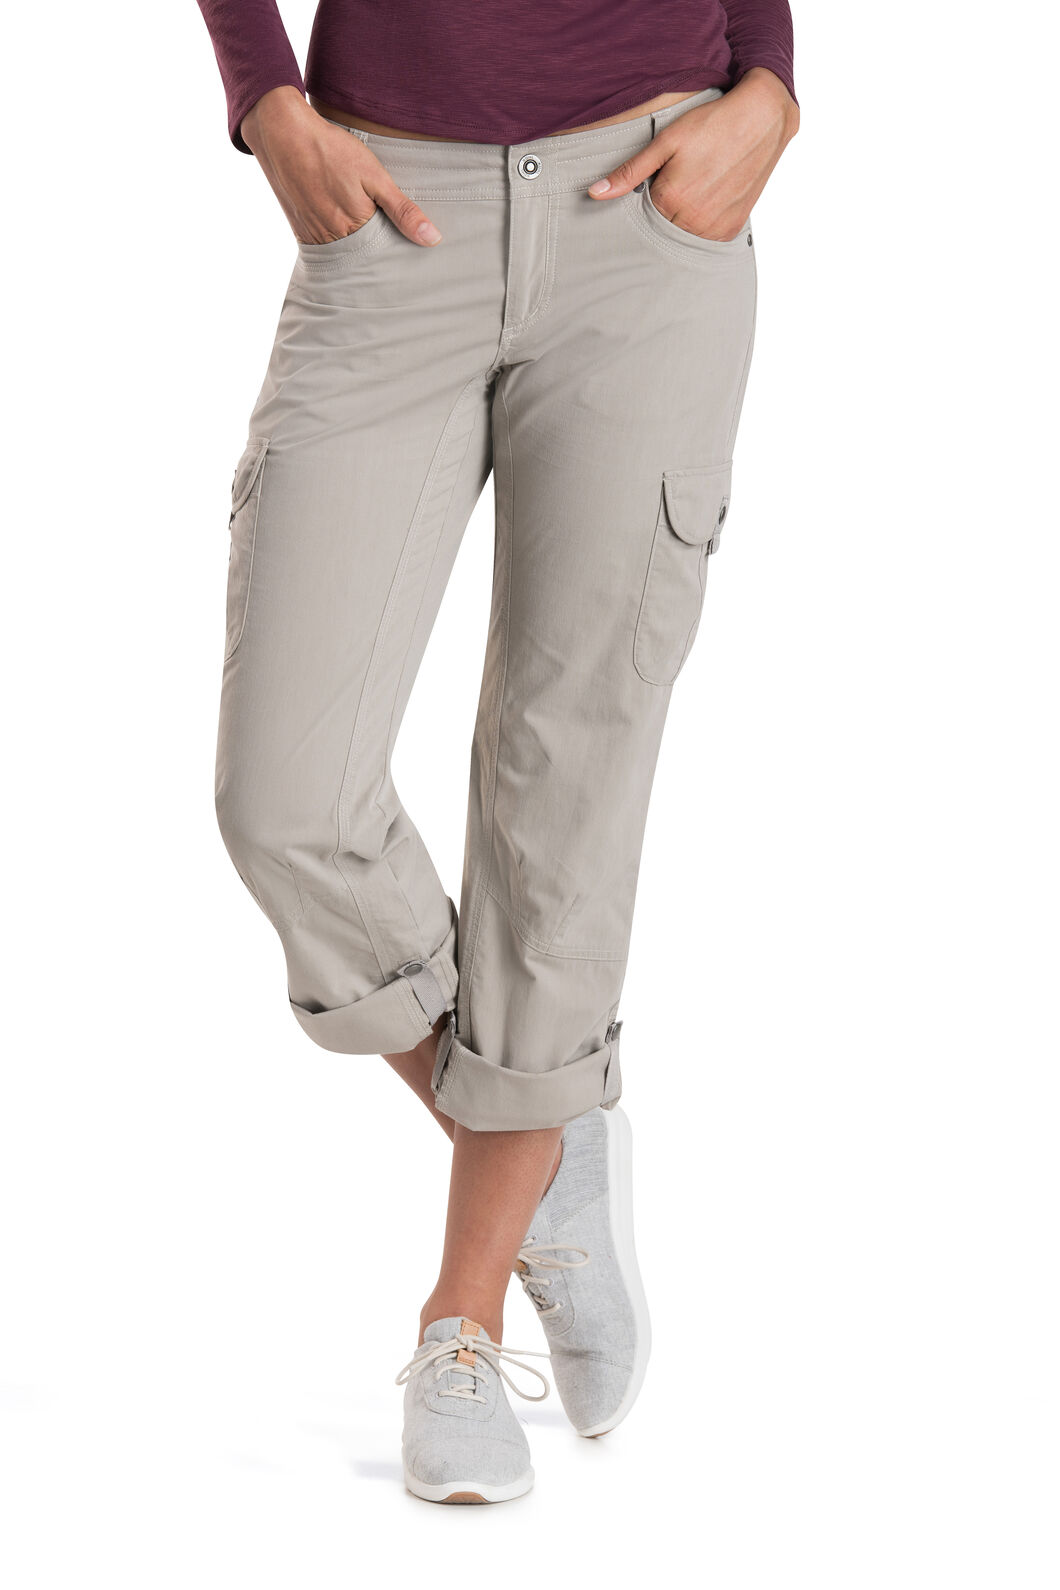 Kuhl Splash Roll-Up Pants (32 inch leg) - Women's | Macpac